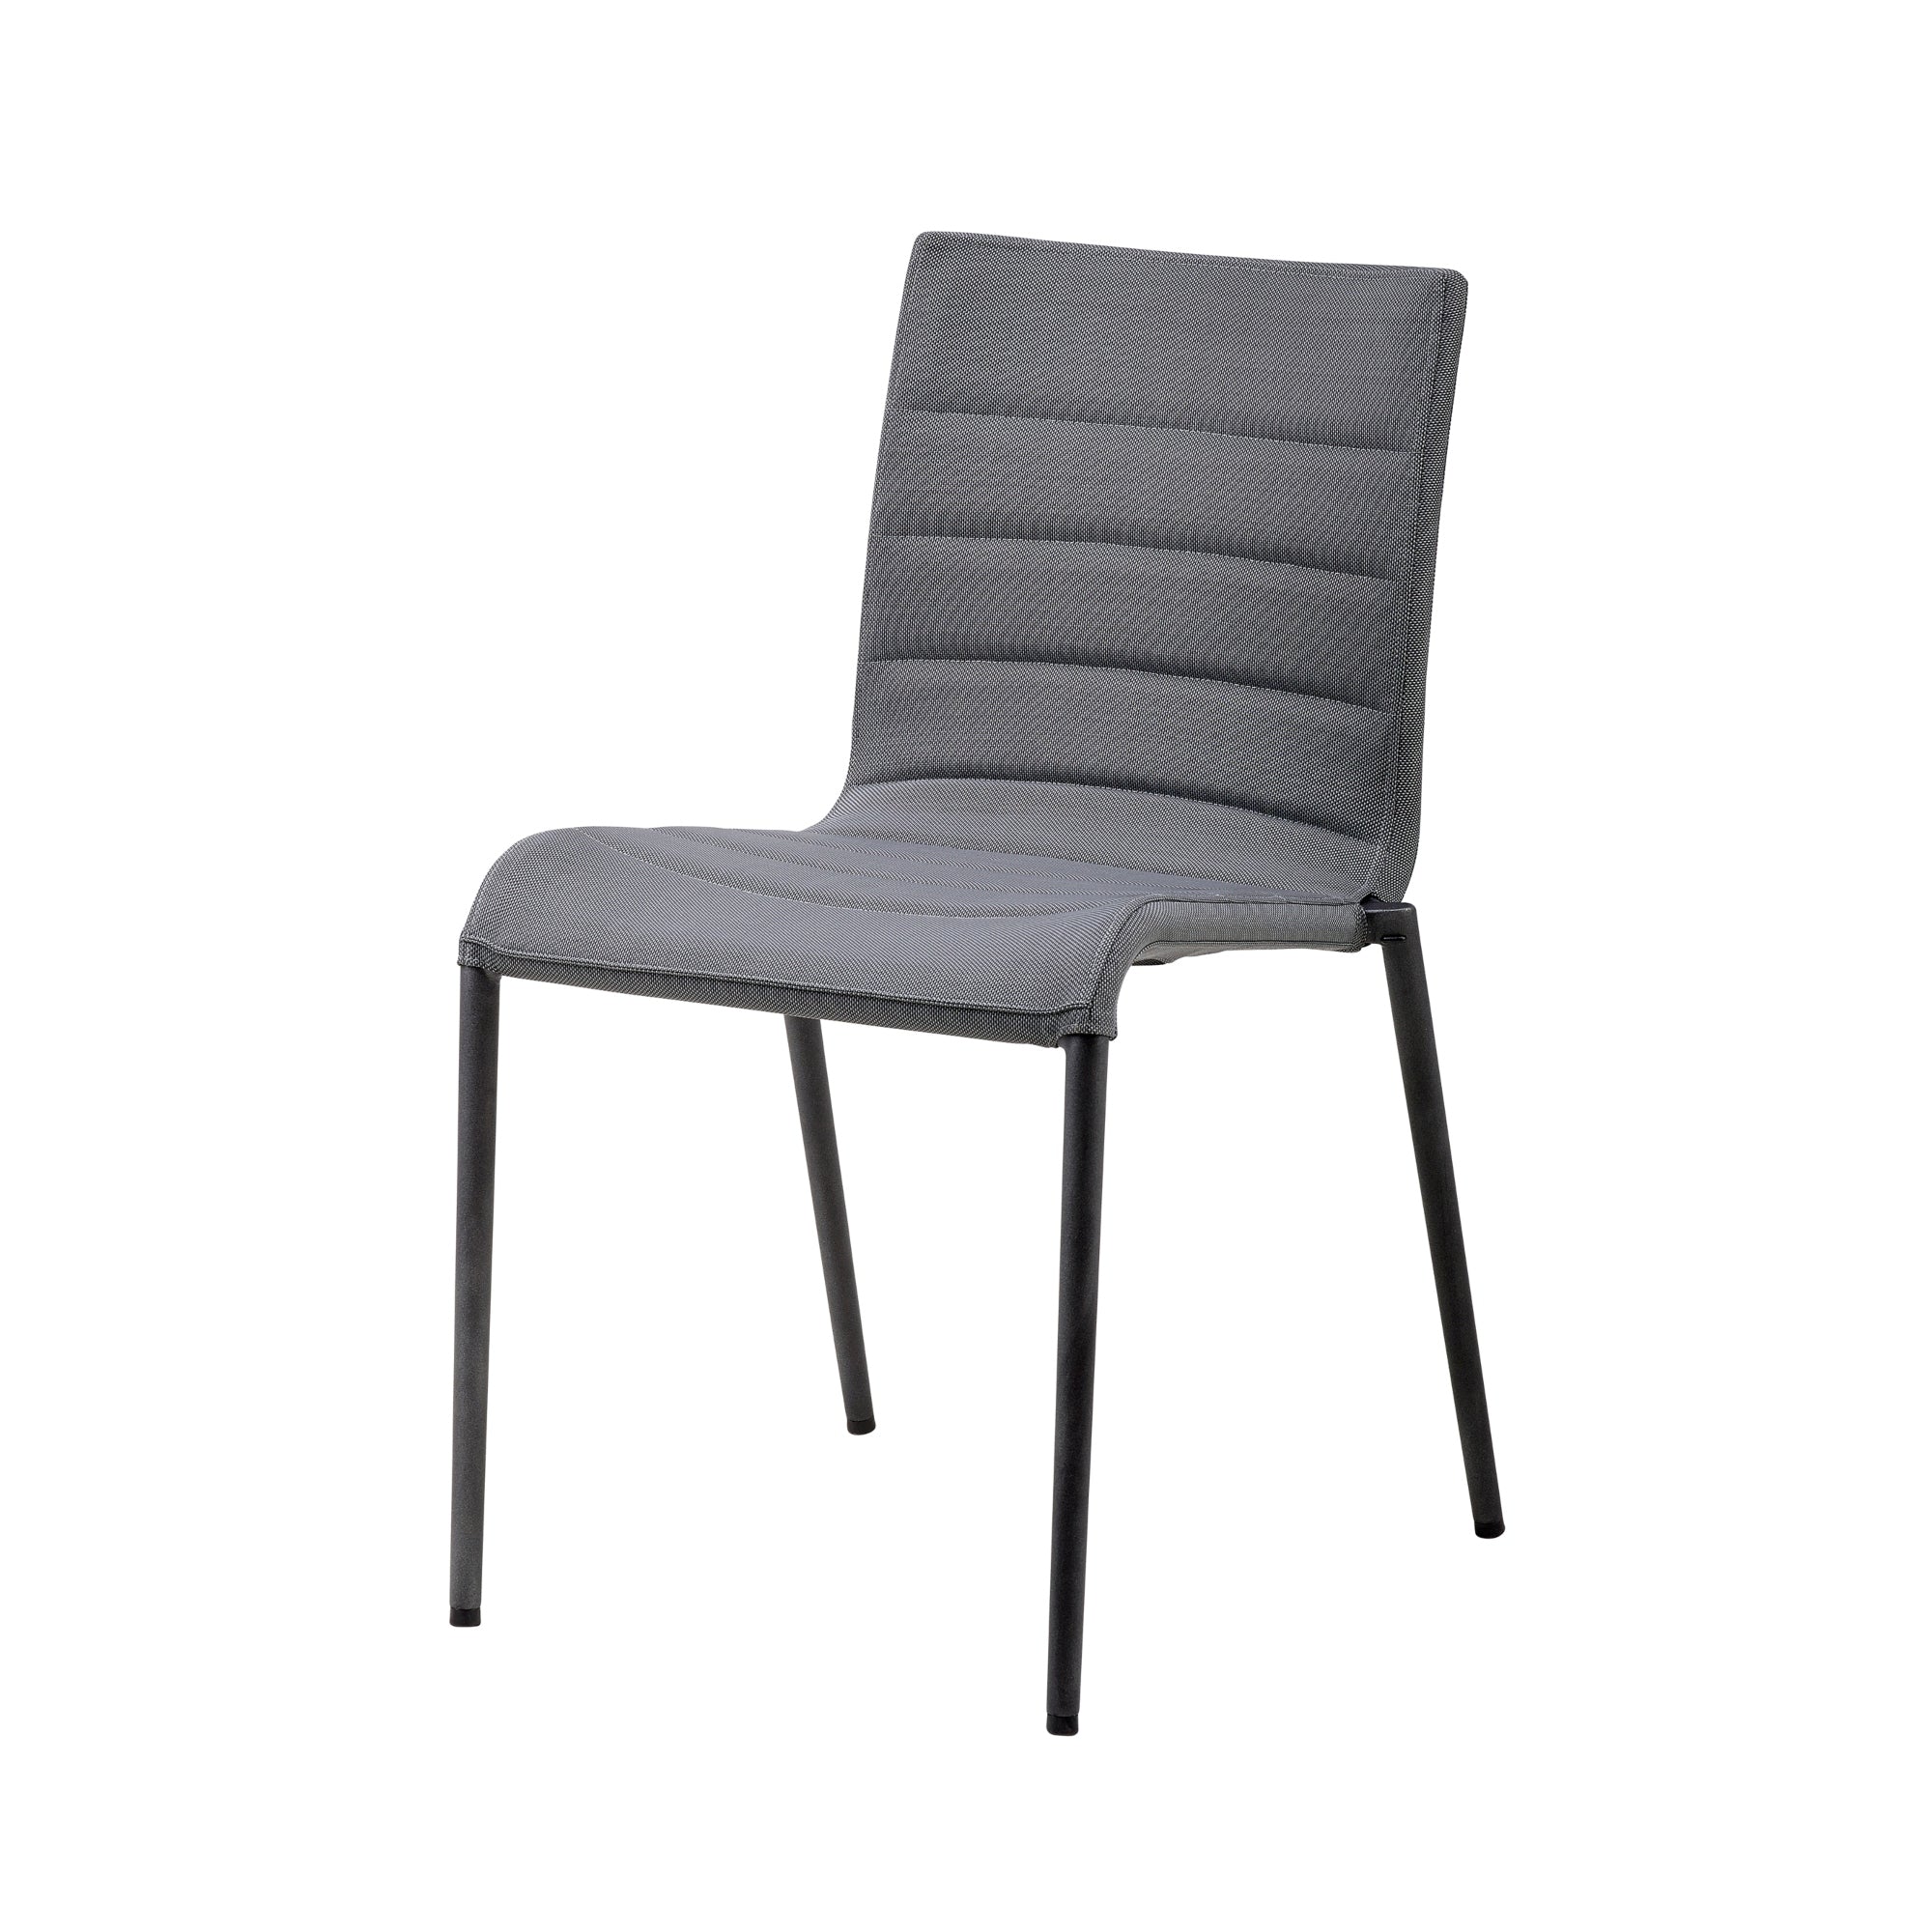 Cane-line Core tuoli harmaa - Laatukaluste